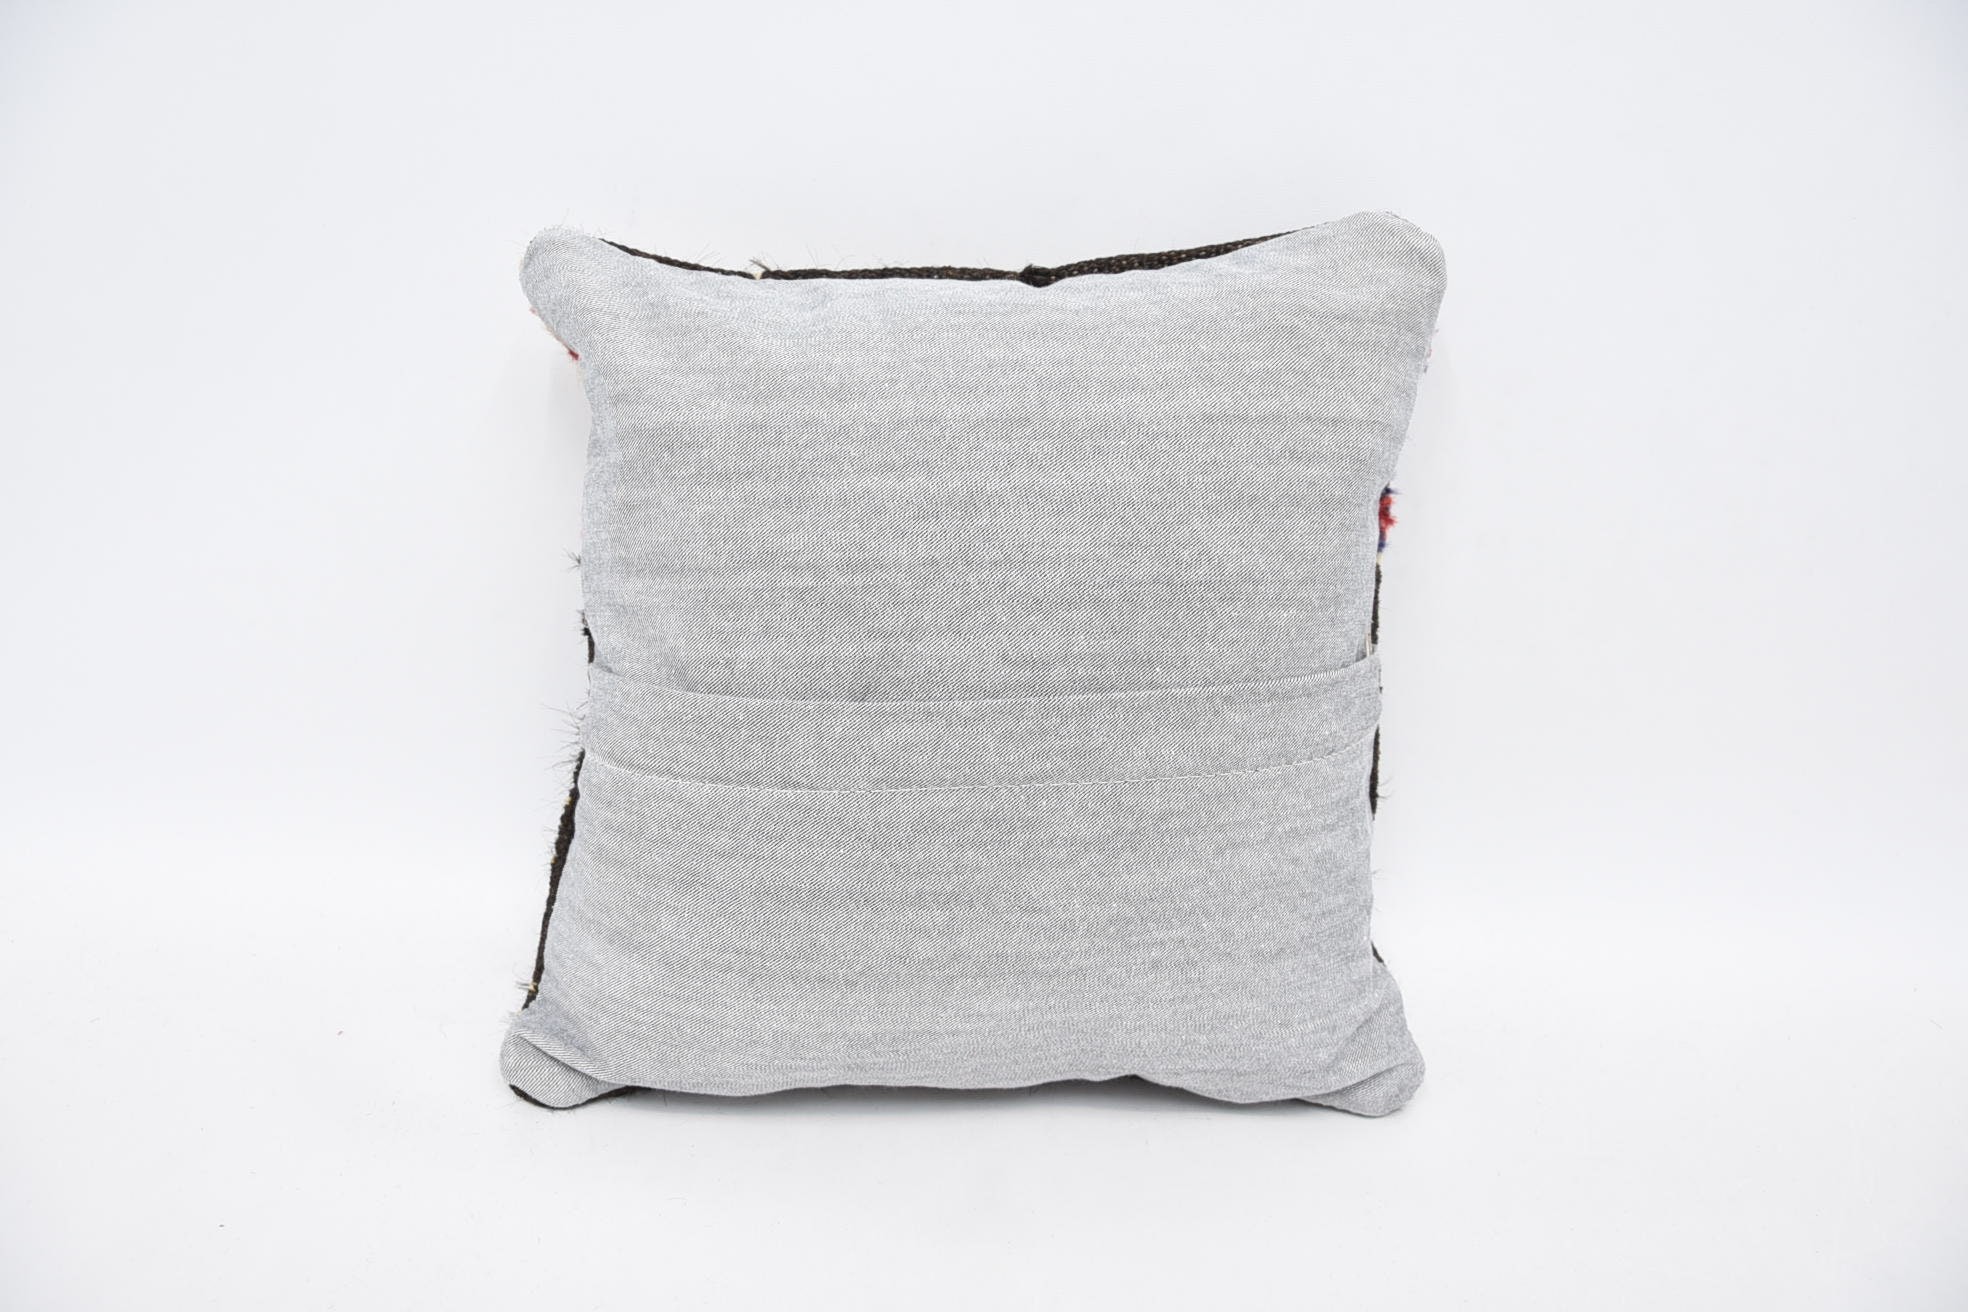 Ethnical Kilim Rug Pillow, Kilim Cushion Sham, Vintage Kilim Throw Pillow, Pastel Cushion, 12"x12" Brown Pillow Sham